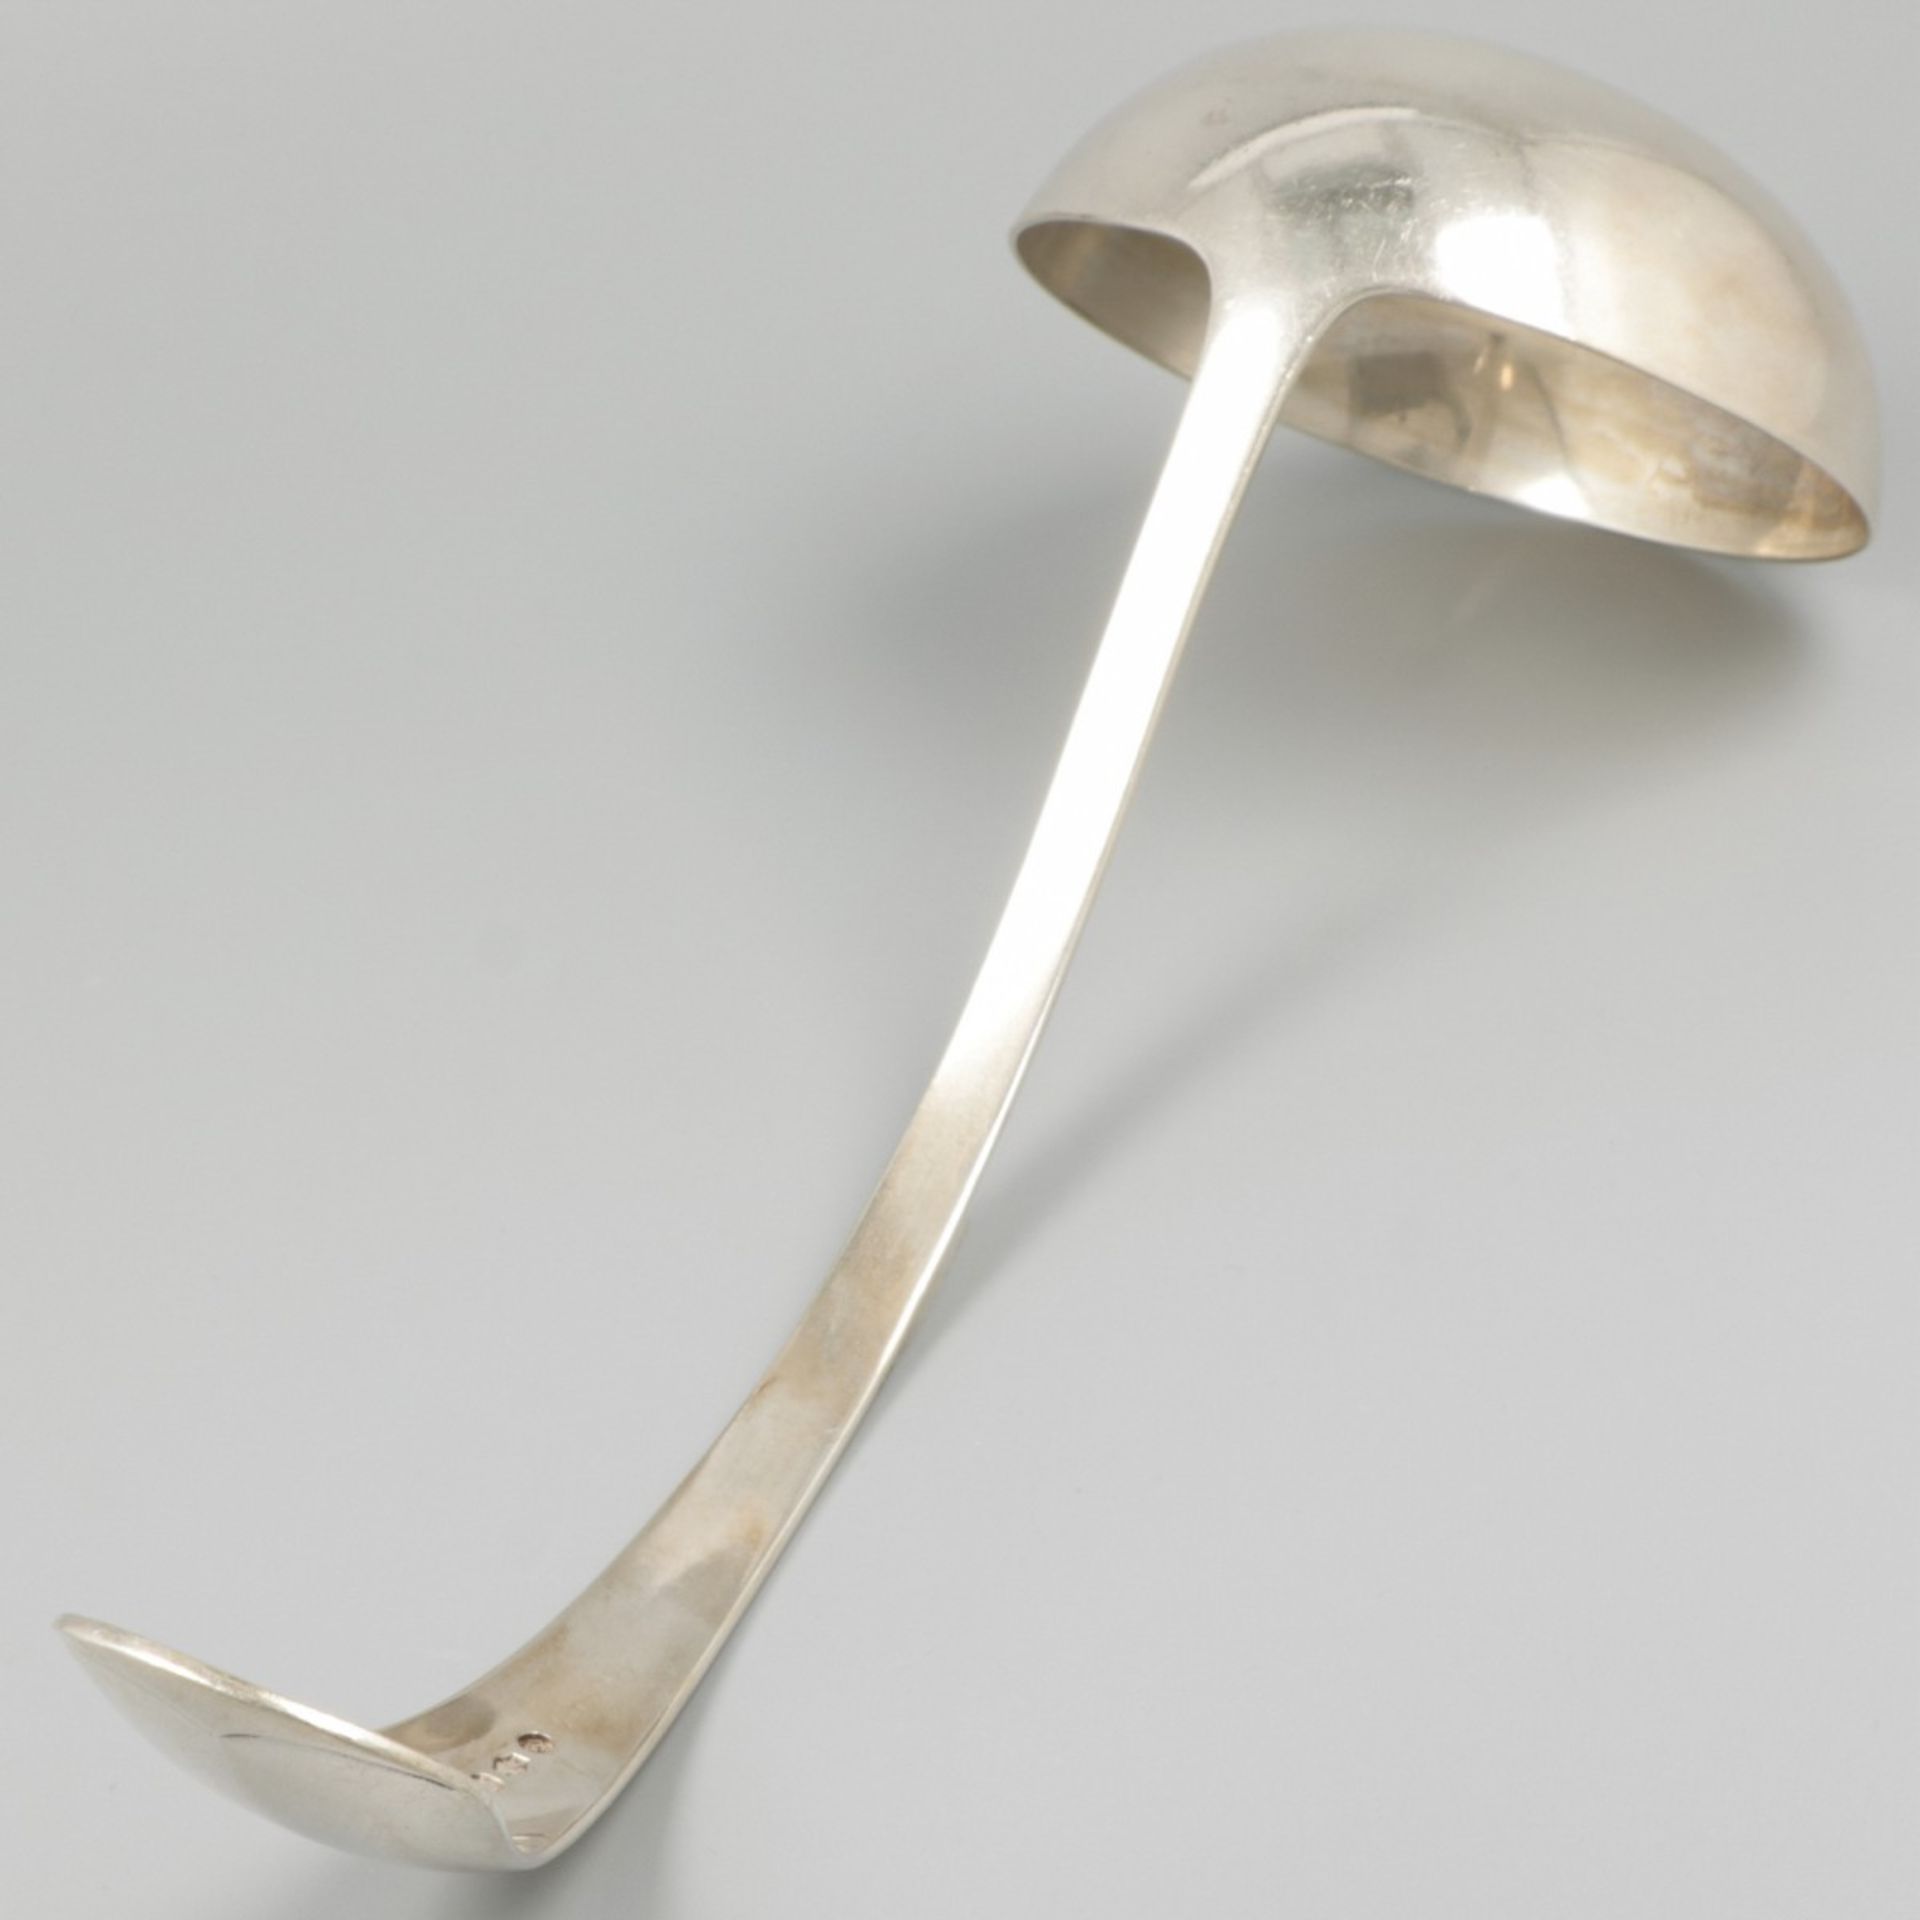 Soeplouche / Soup spoon ''Haags Lofje" silver. - Image 4 of 5